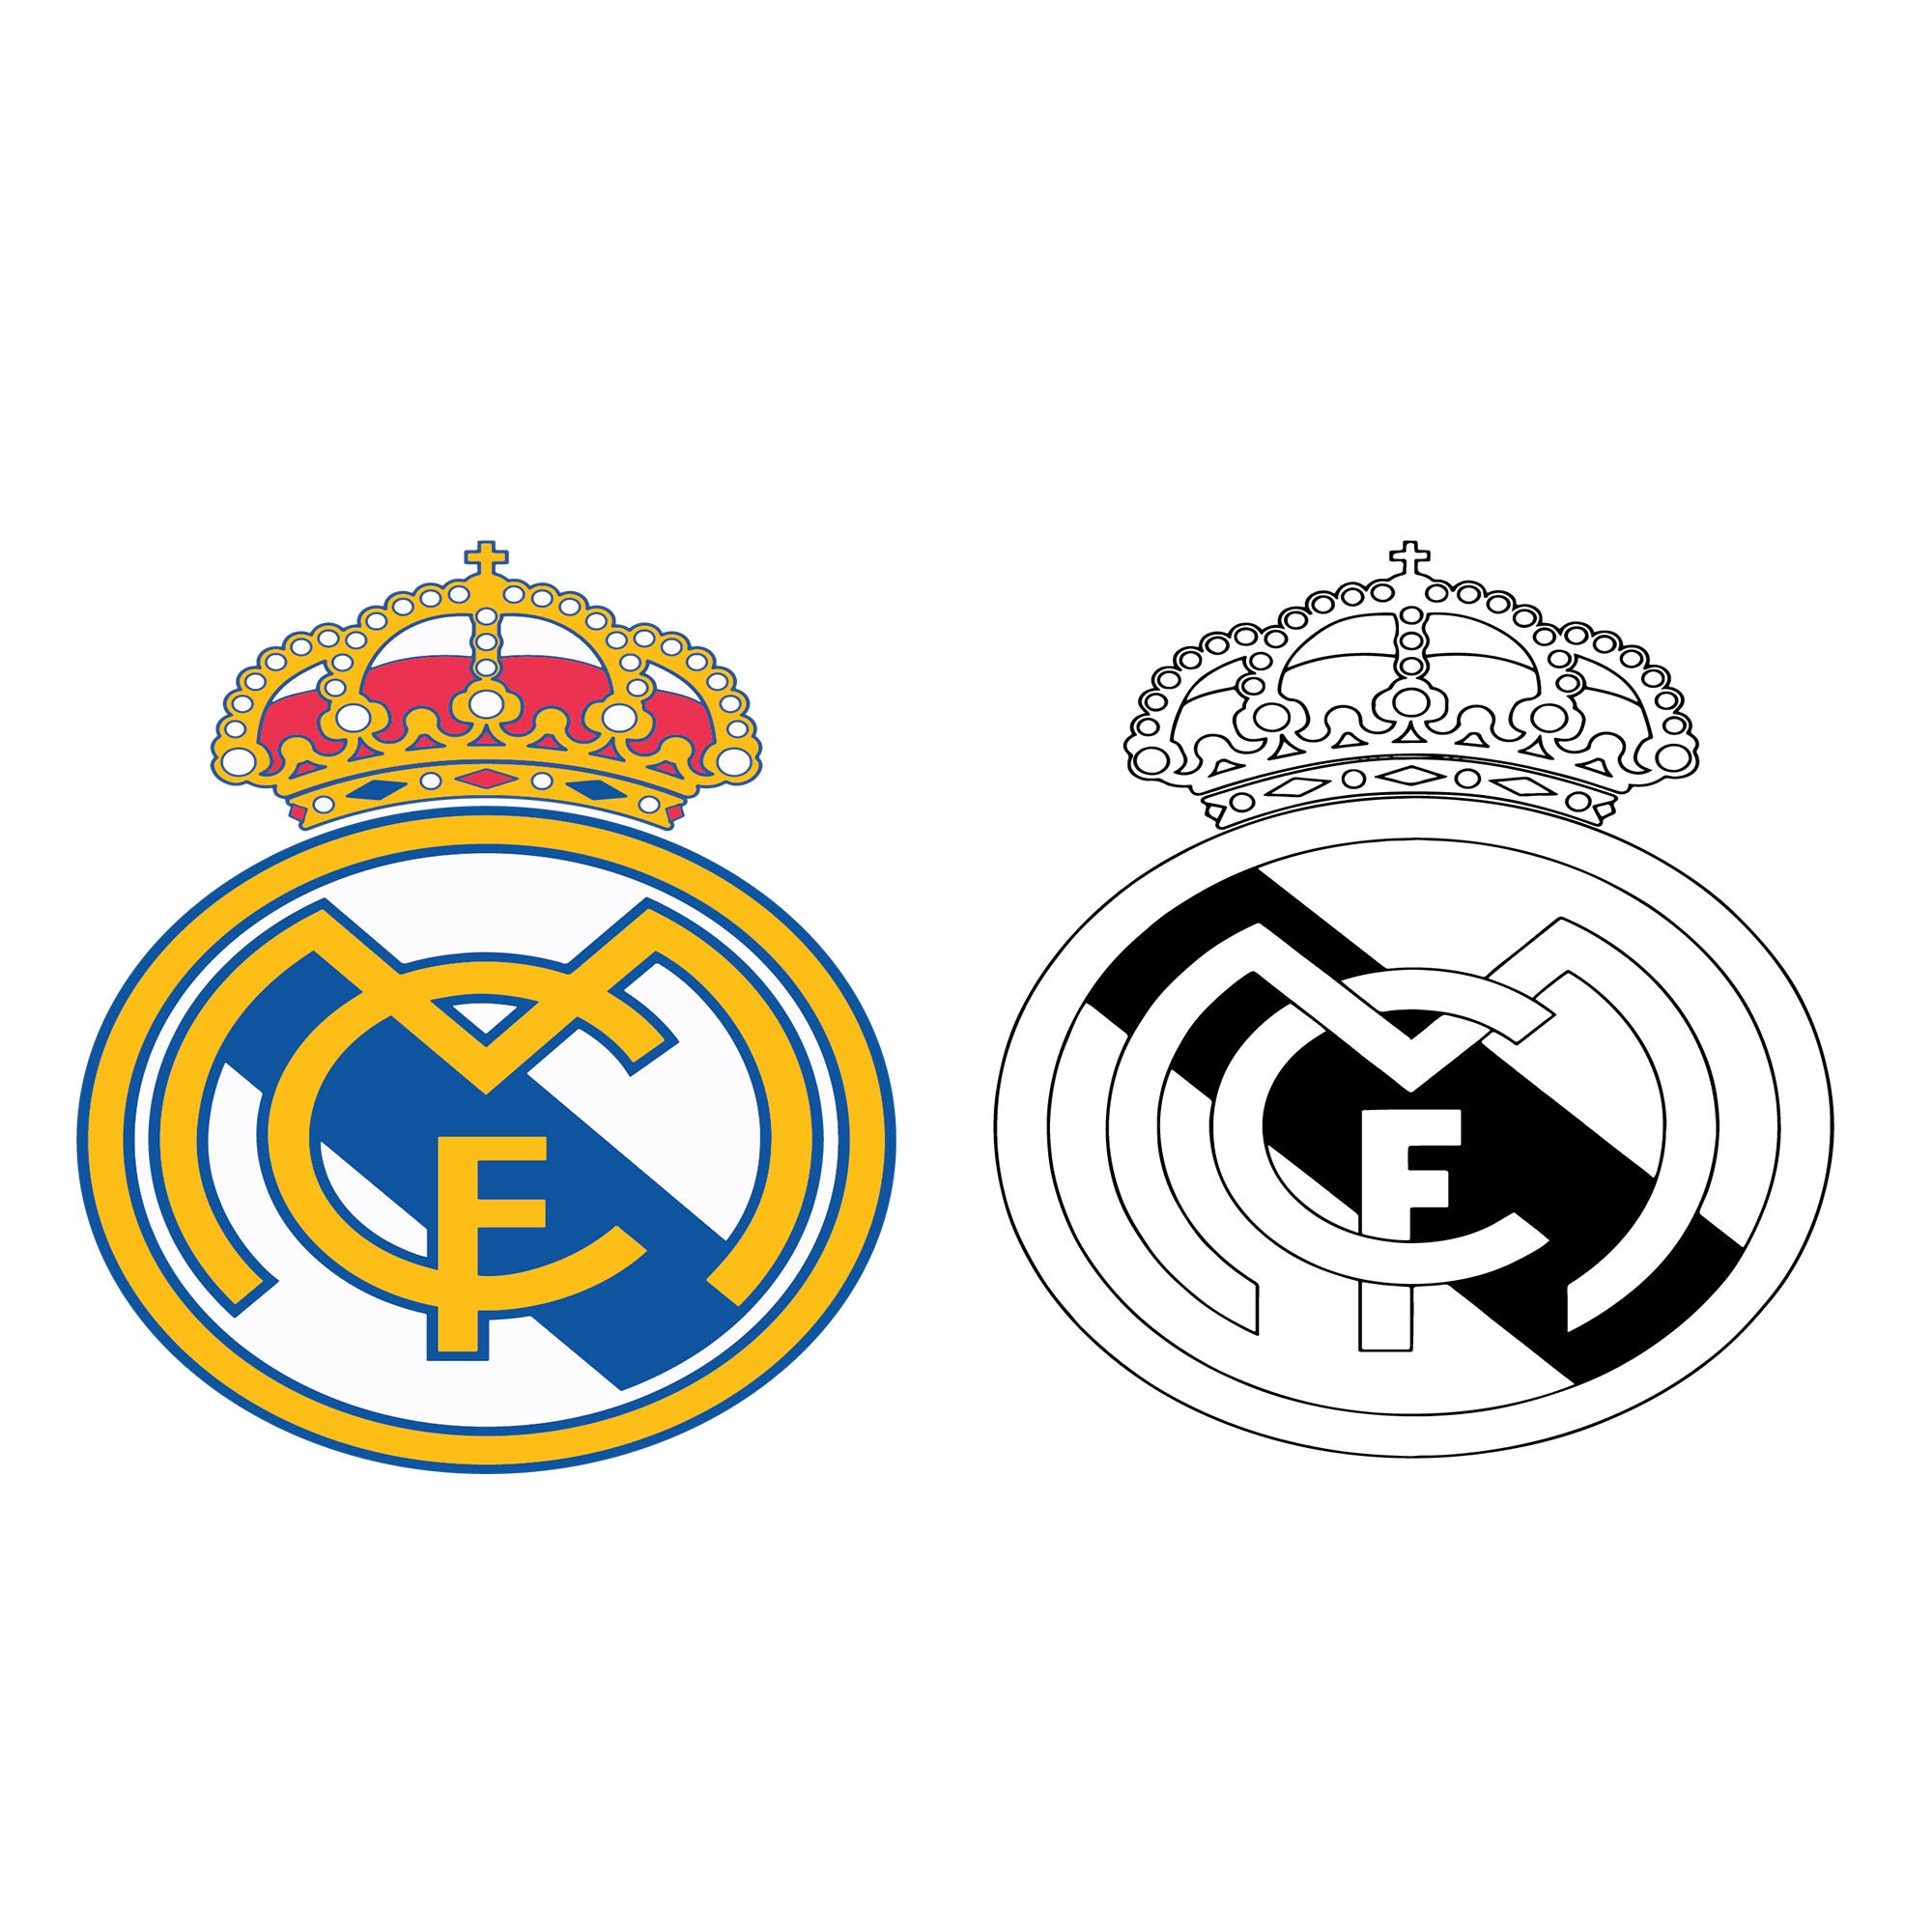 Pegatina escudo fútbol Real Madrid